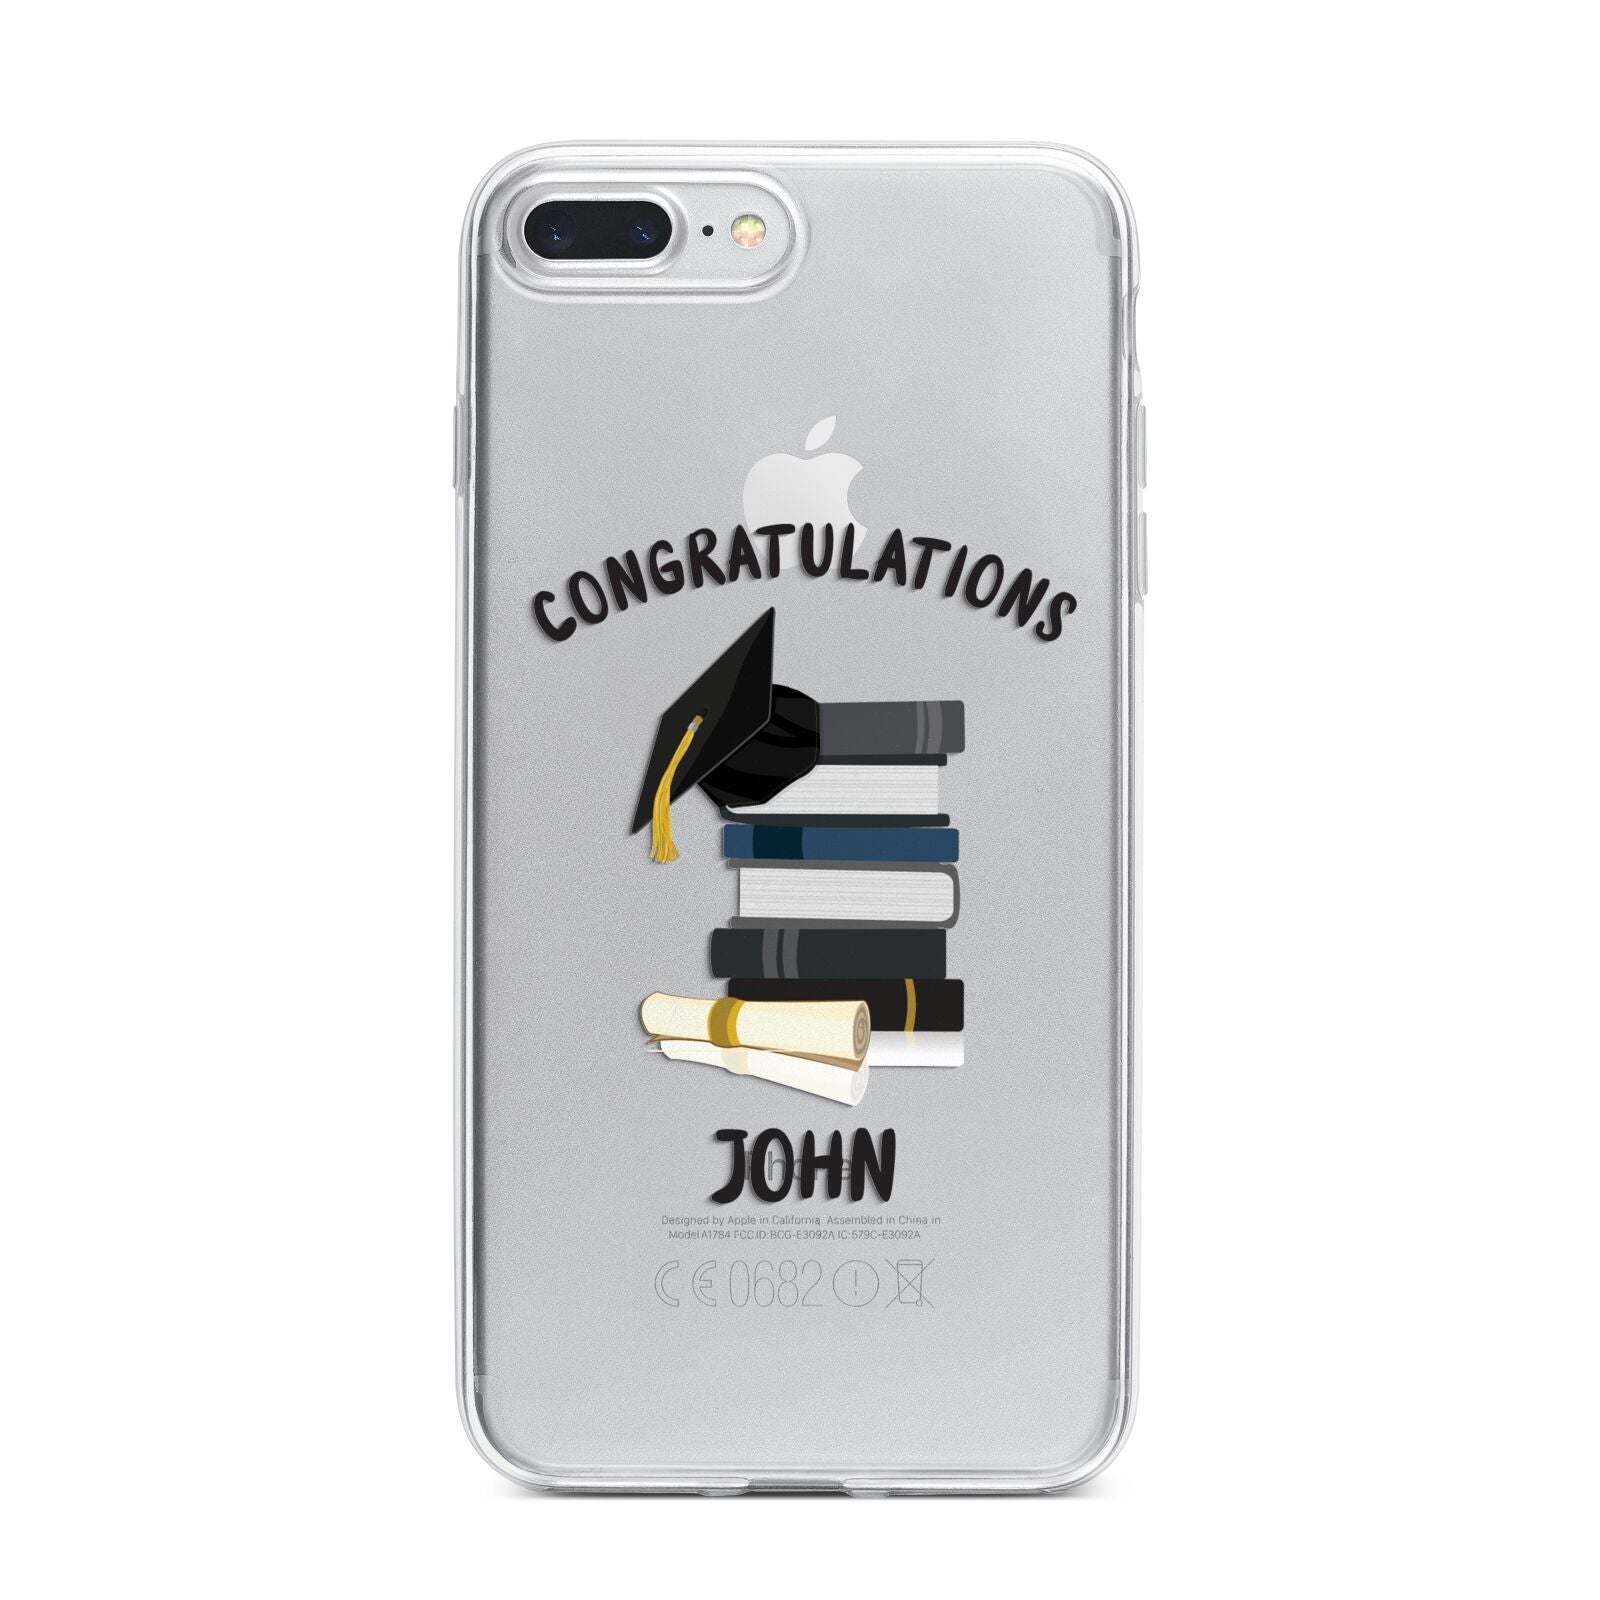 Congratulations Graduate iPhone 7 Plus Bumper Case on Silver iPhone